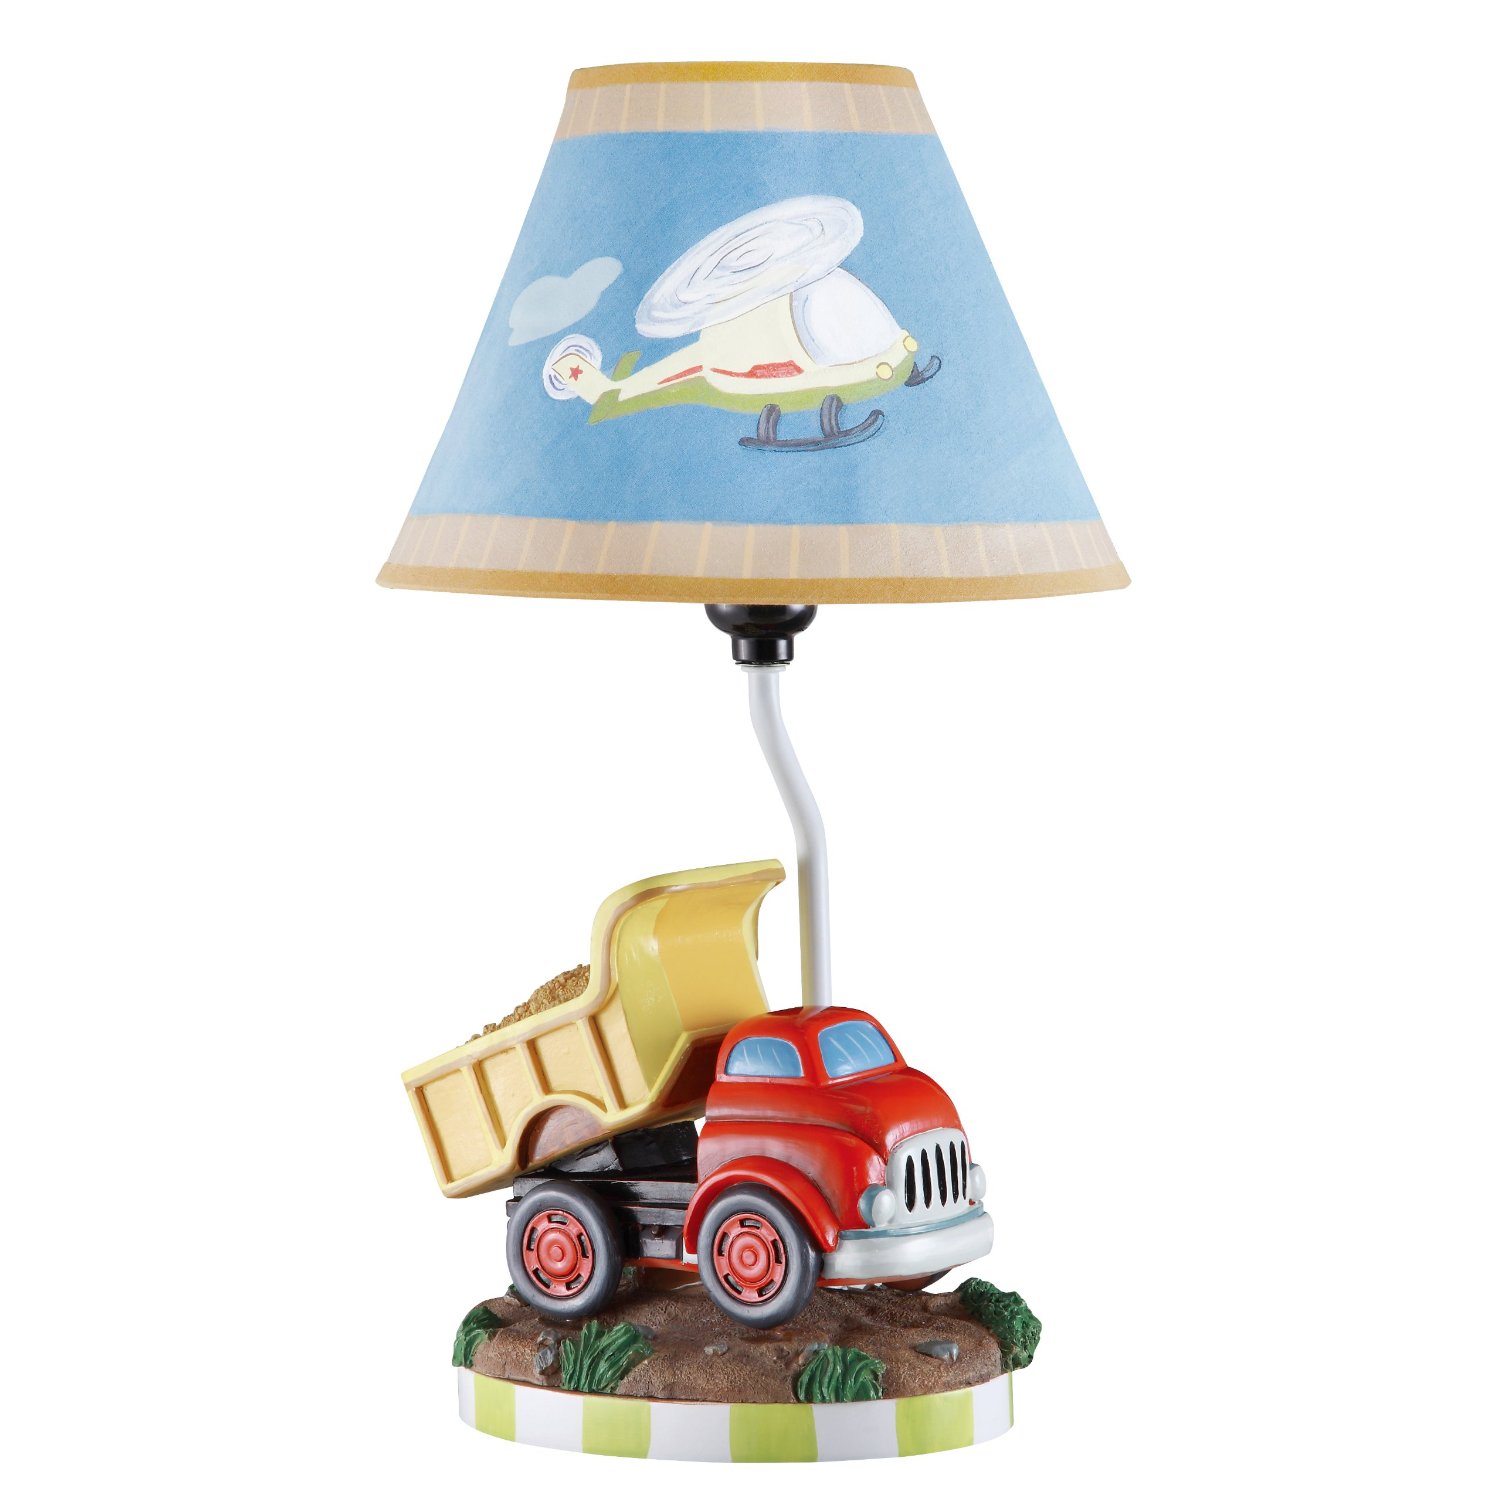 Cute Lamp for Kids Room